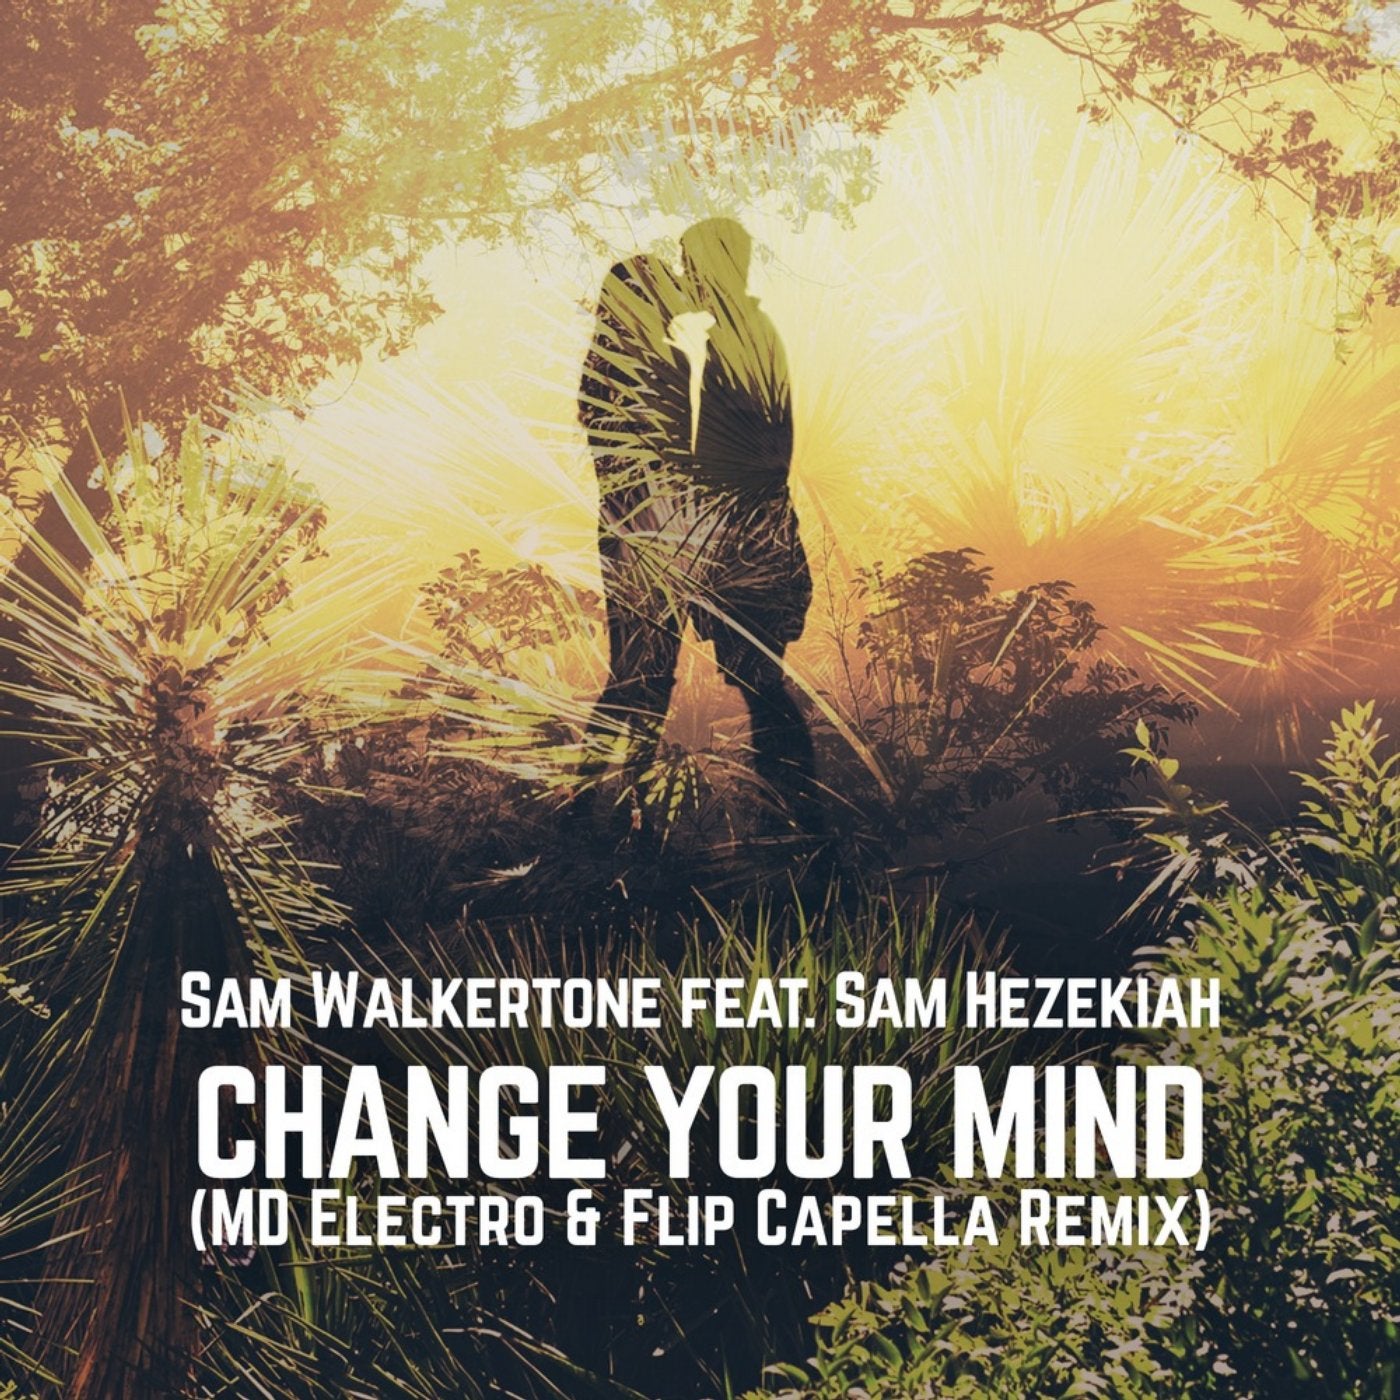 Change Your Mind (Md Electro & Flip Capella Remix) (feat. Sam Hezekiah)